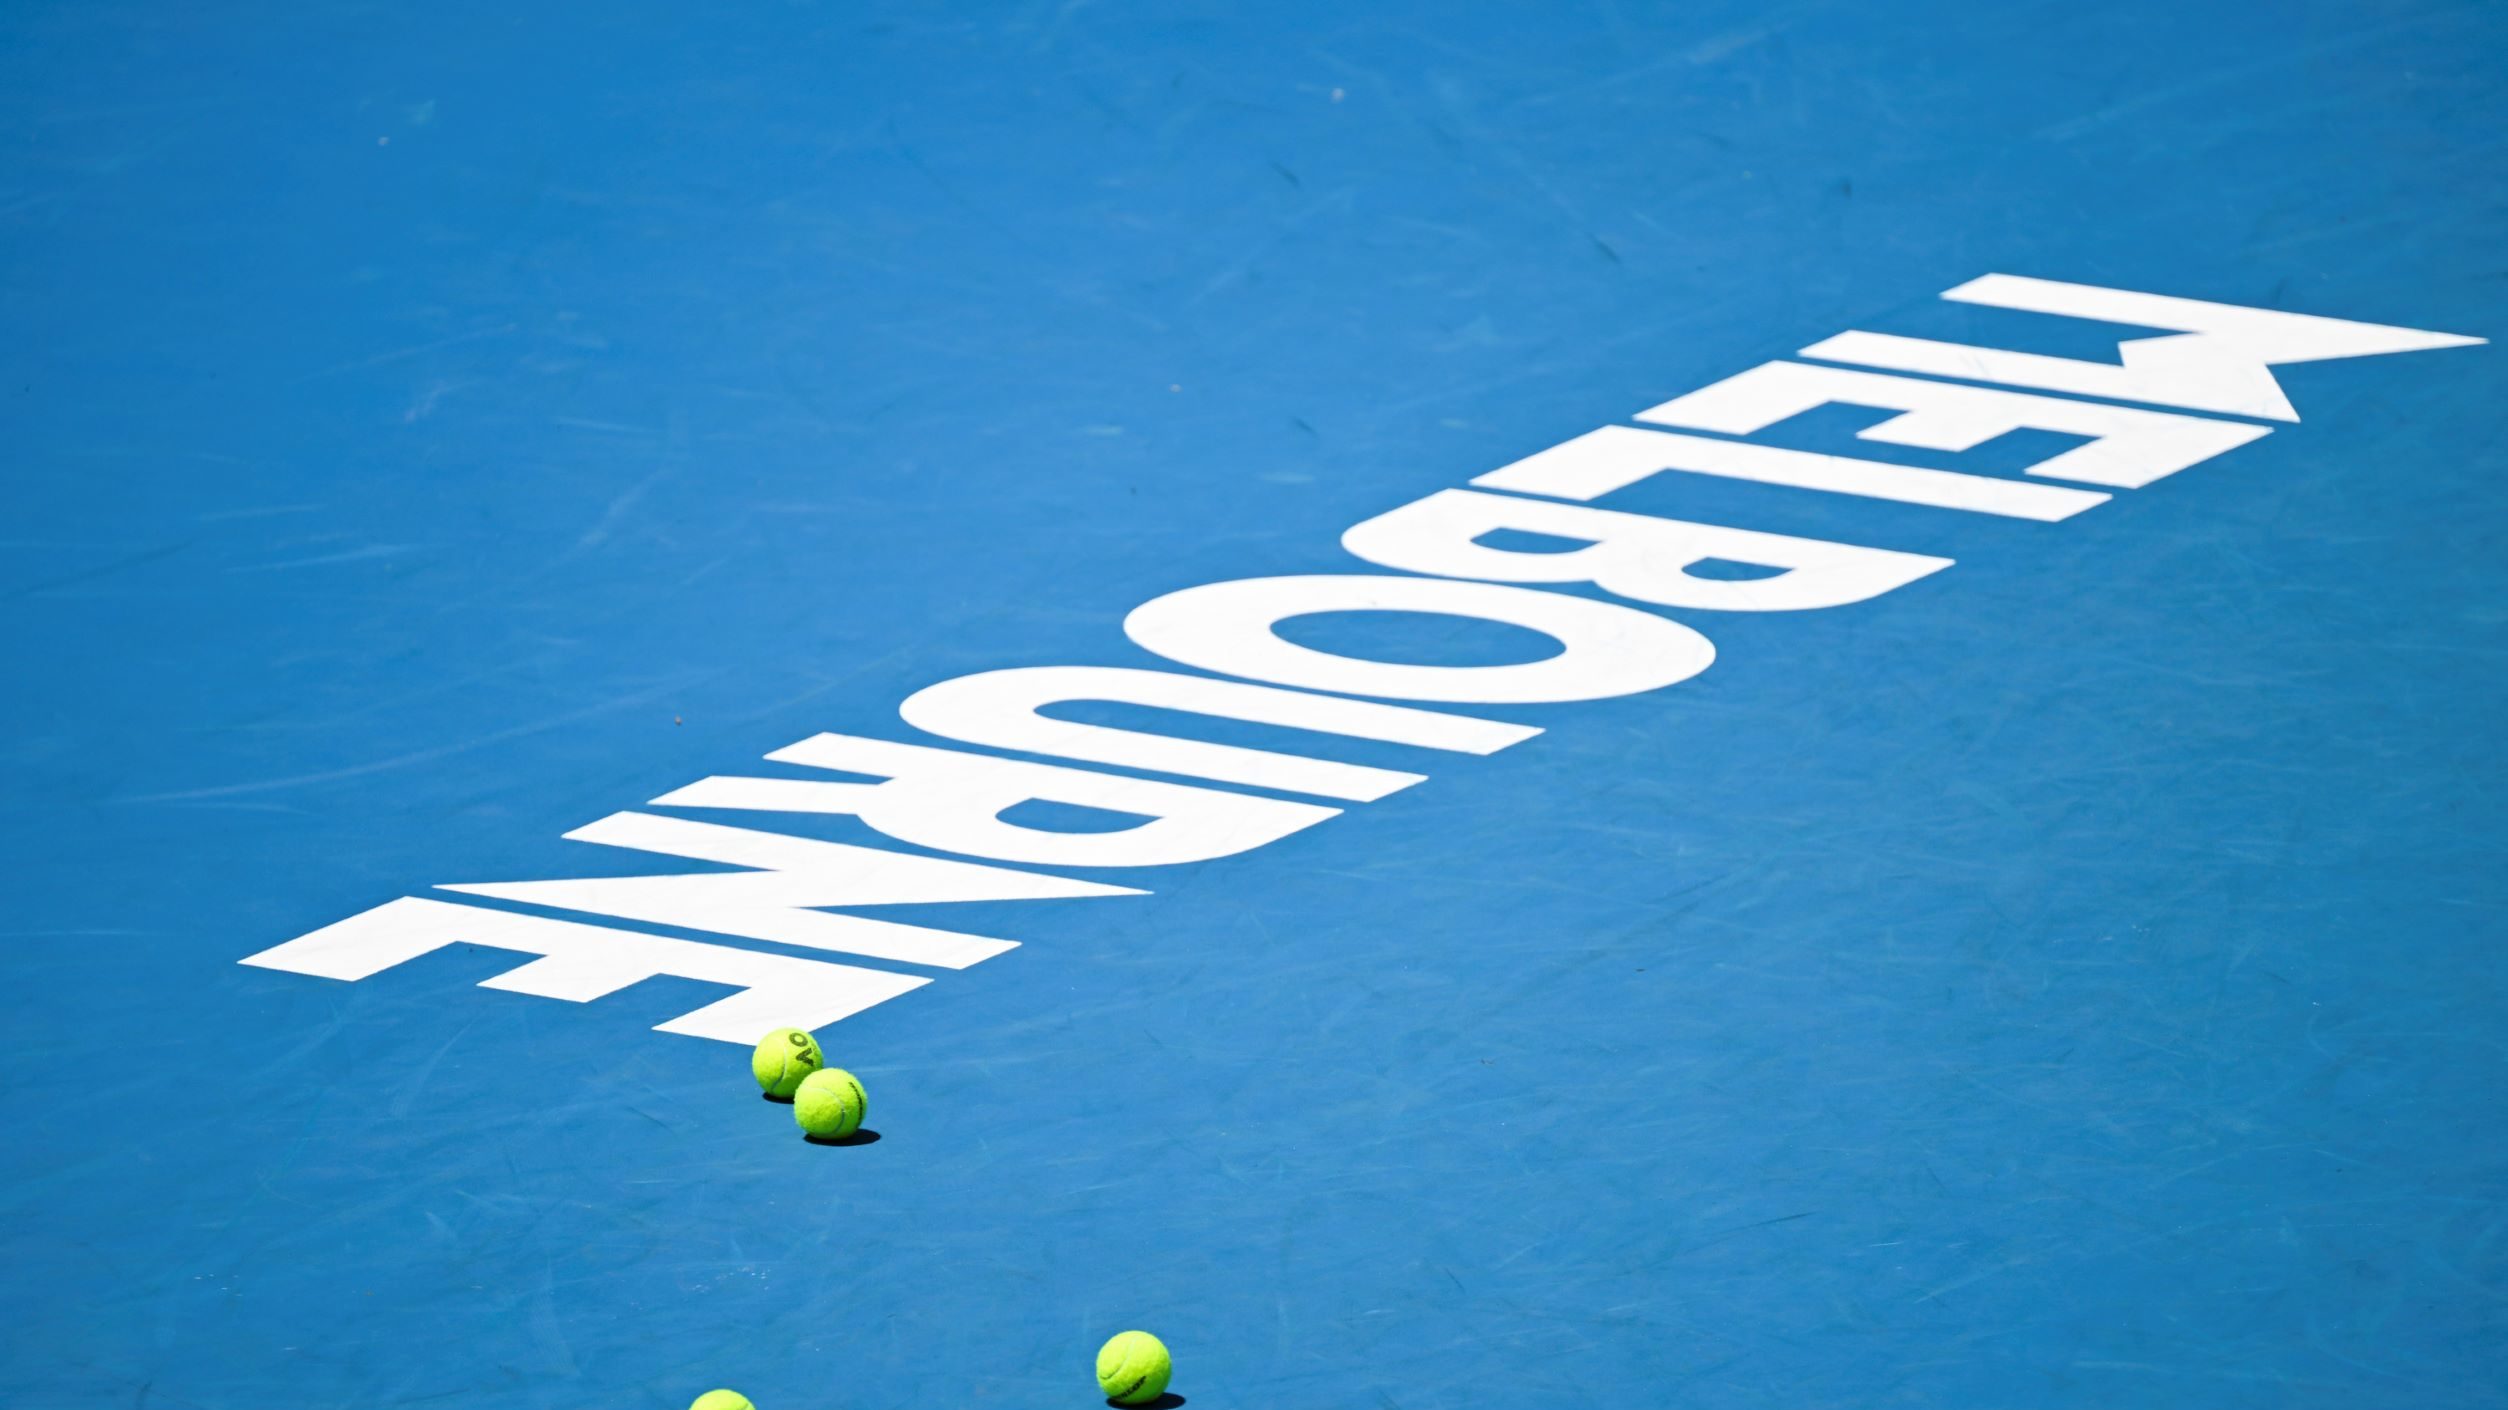 Melbourne logo at Australian Open